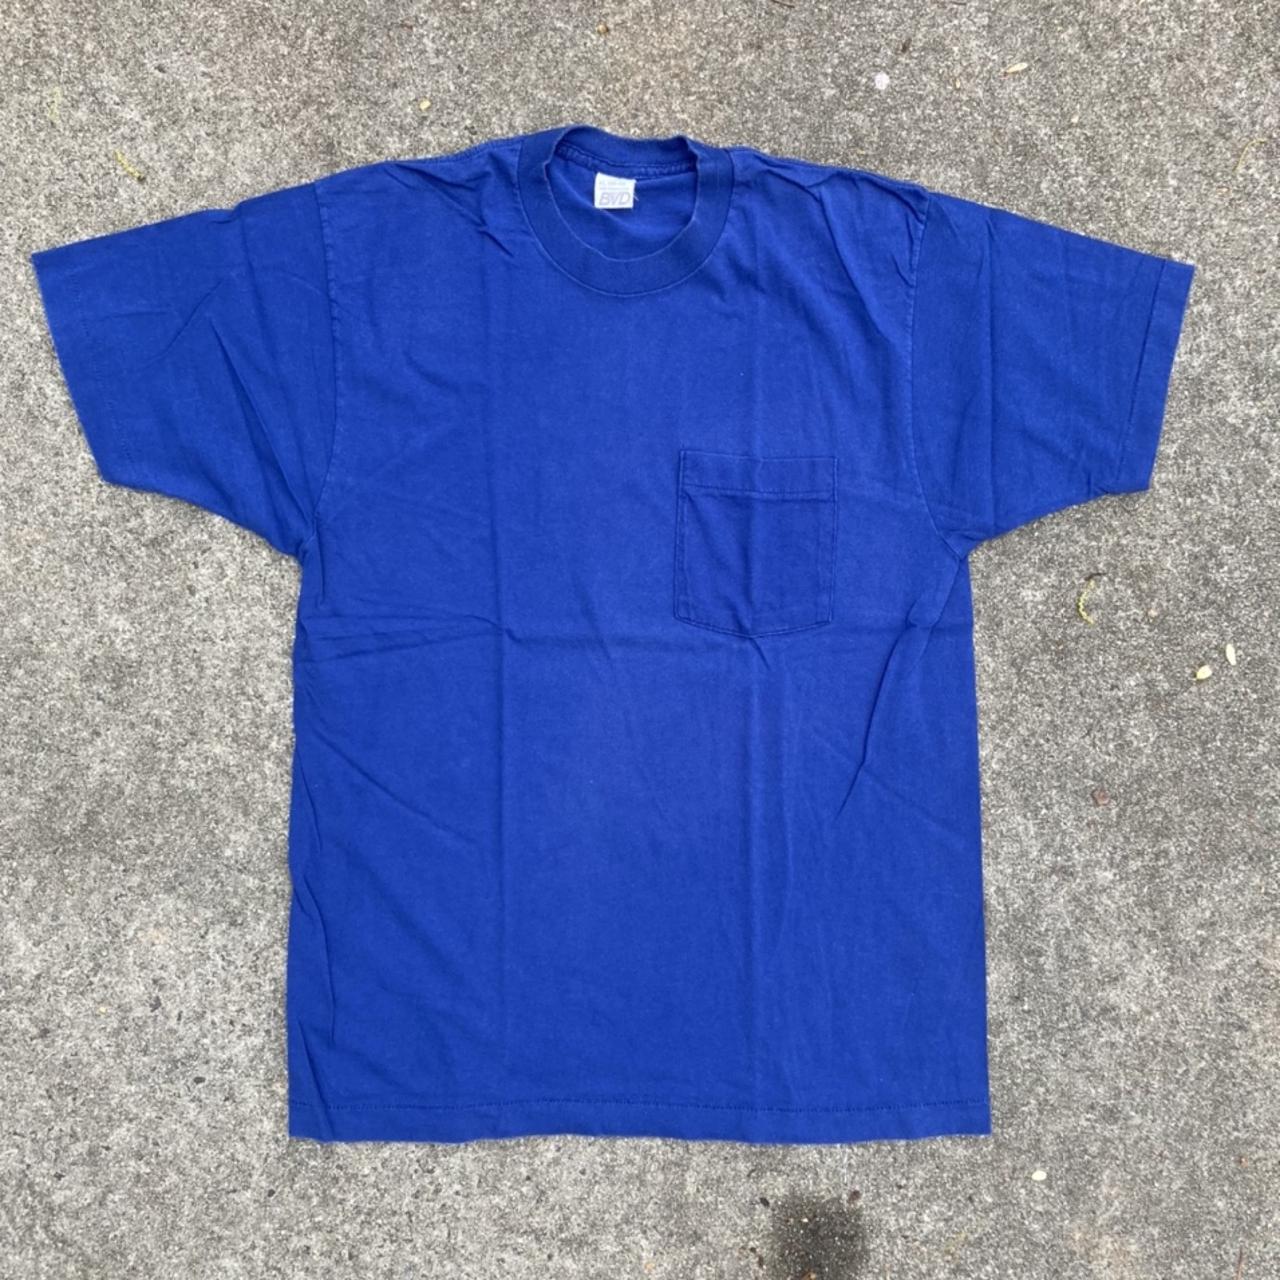 Vintage Single Stitch BVD Blue Shirt - Depop